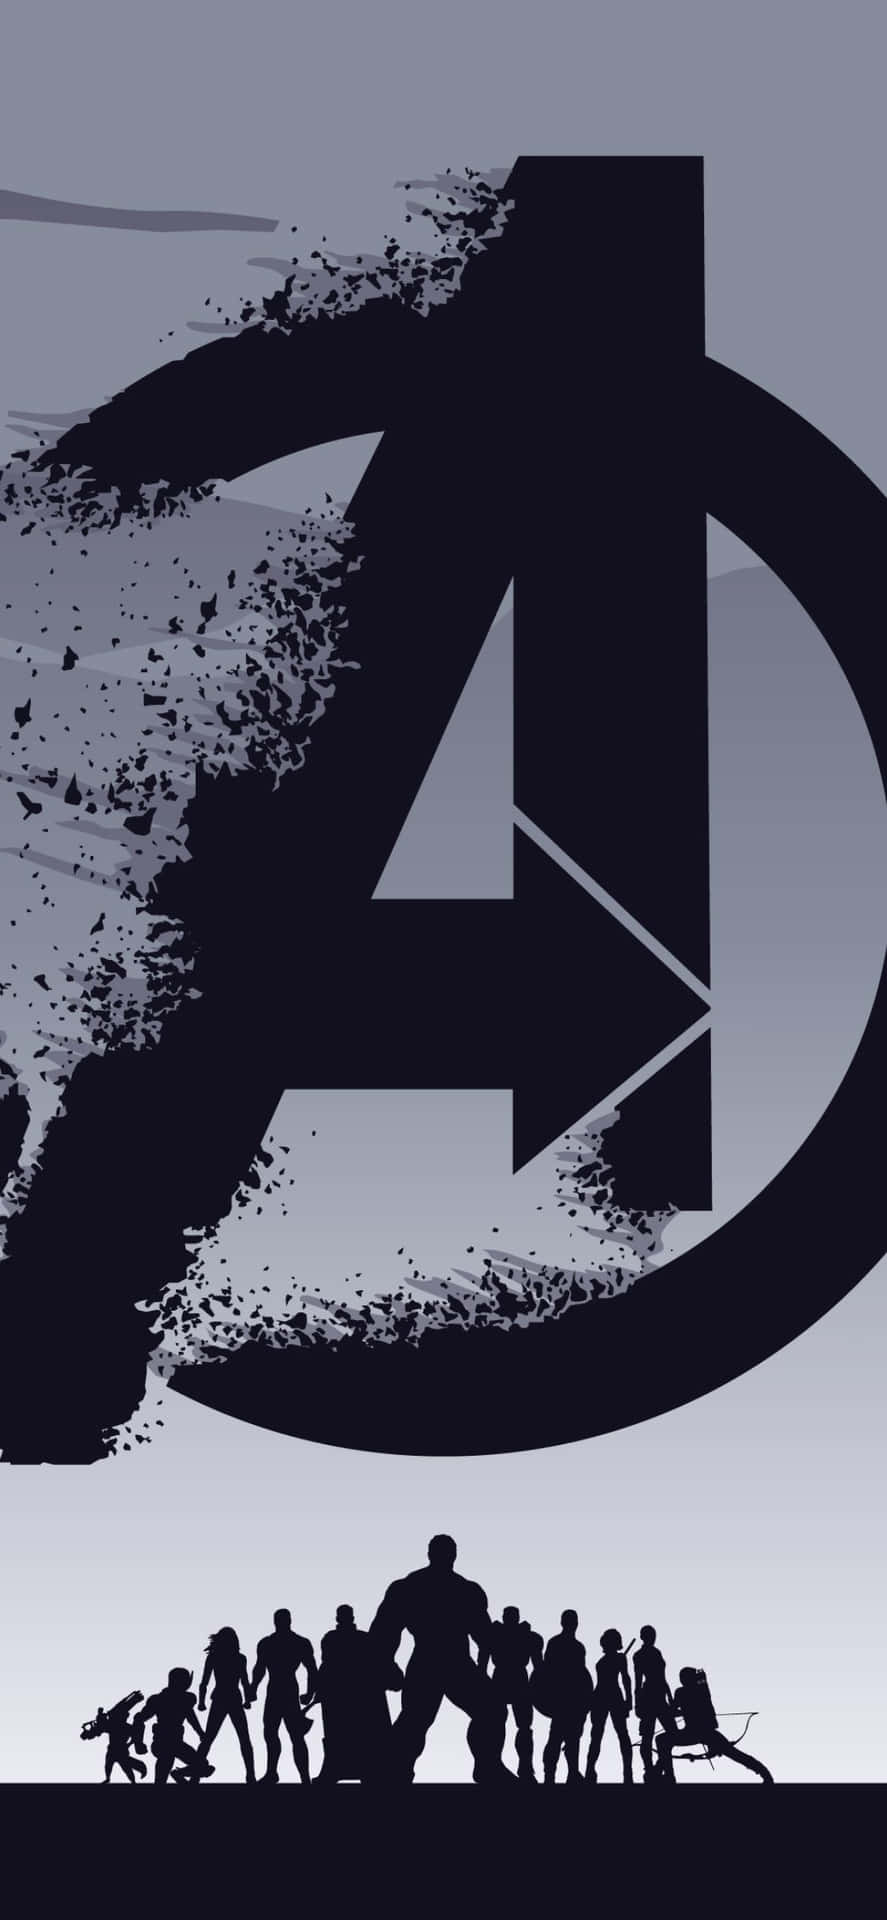 Vis din fantastiske side med iPhone Xs Marvel's Avengers-tapet